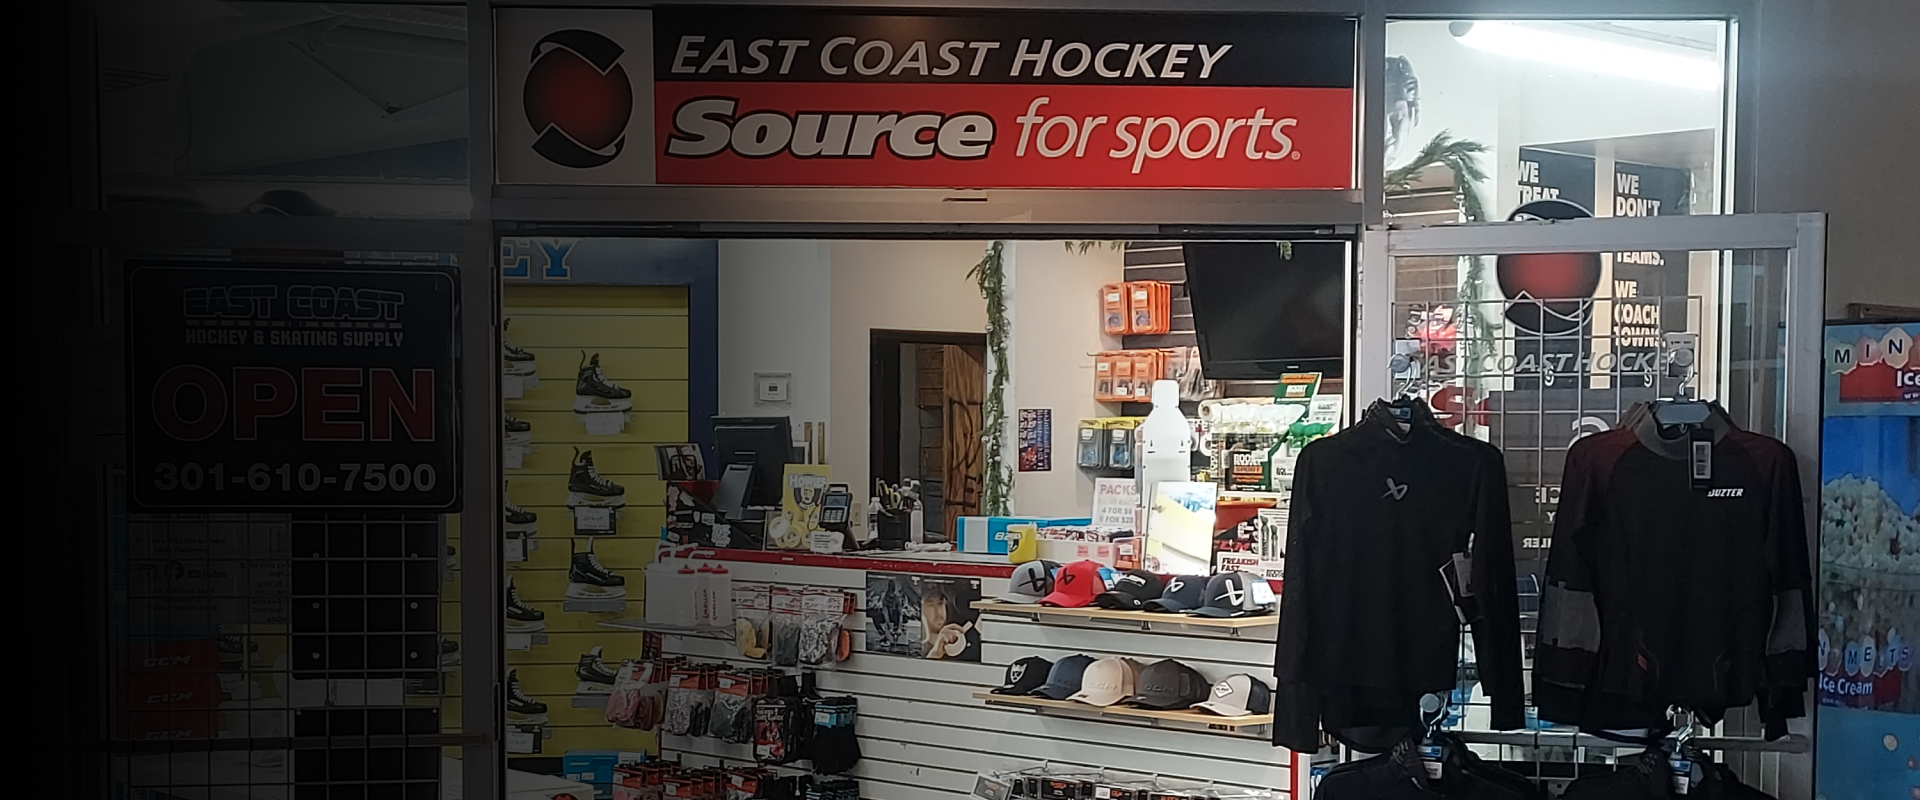 East Coast Hockey and Skating Supplies